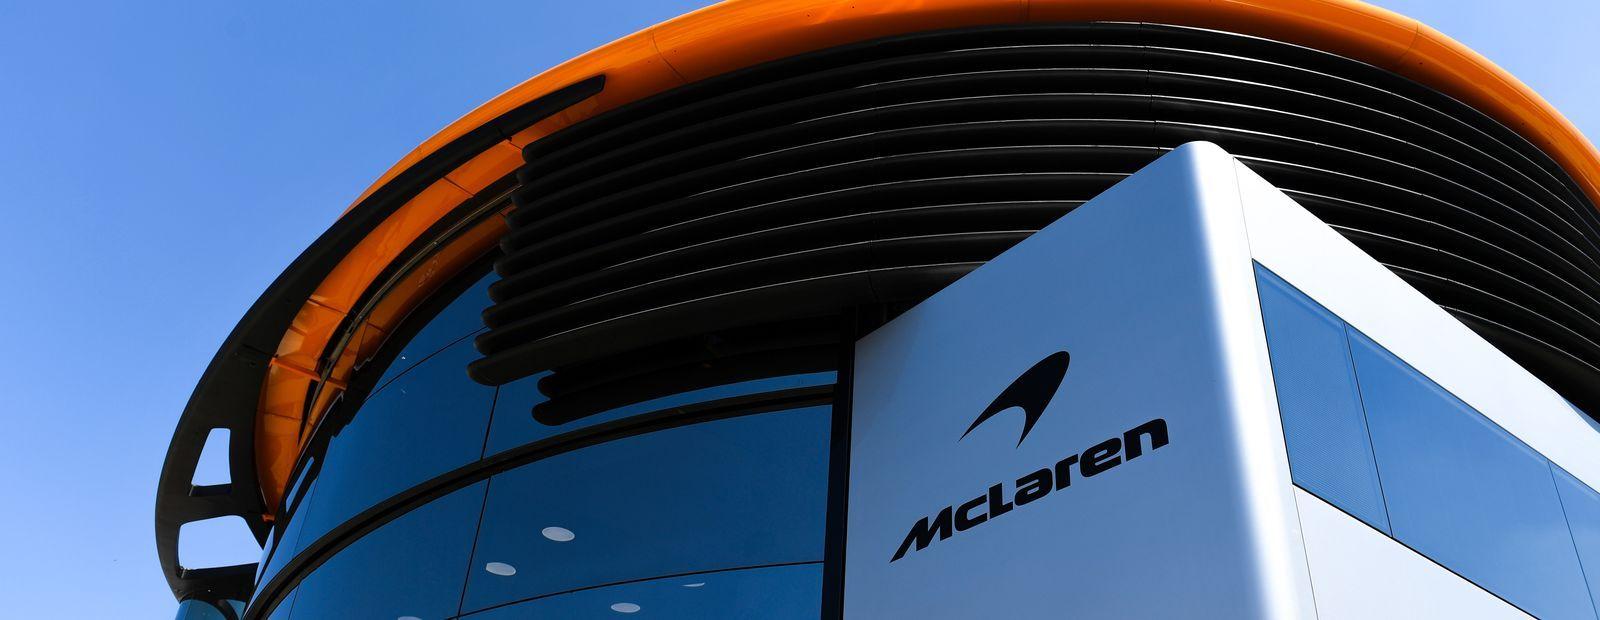 White British American Tobacco Logo - McLaren Formula 1 - McLaren Racing announces global partnership with ...